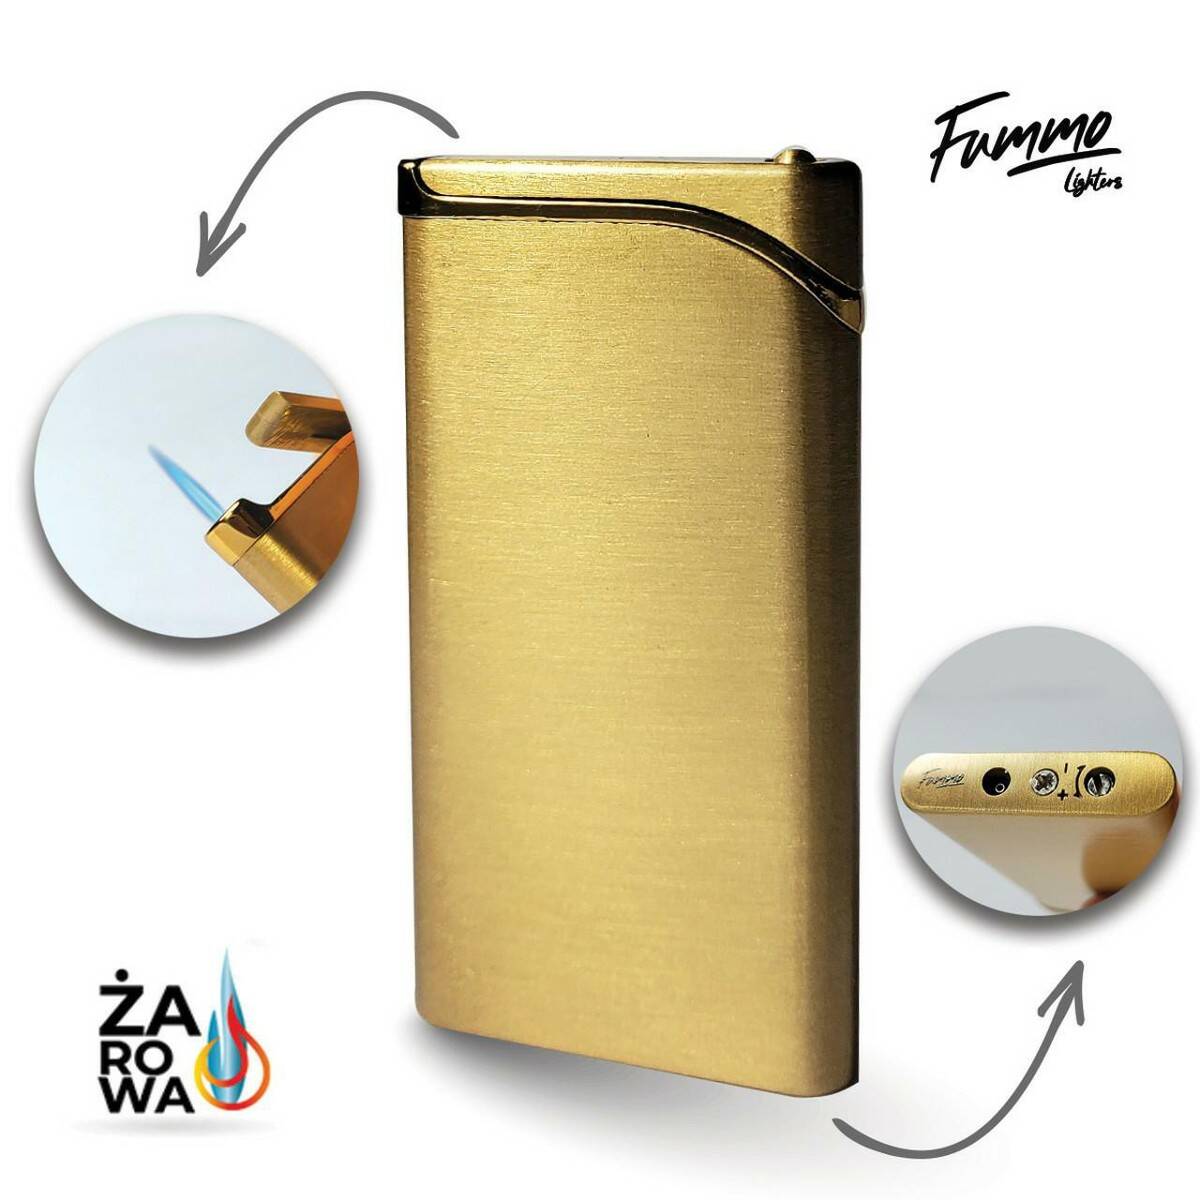 Lighter Fummo Toora - Gold (Zdjęcie 1)